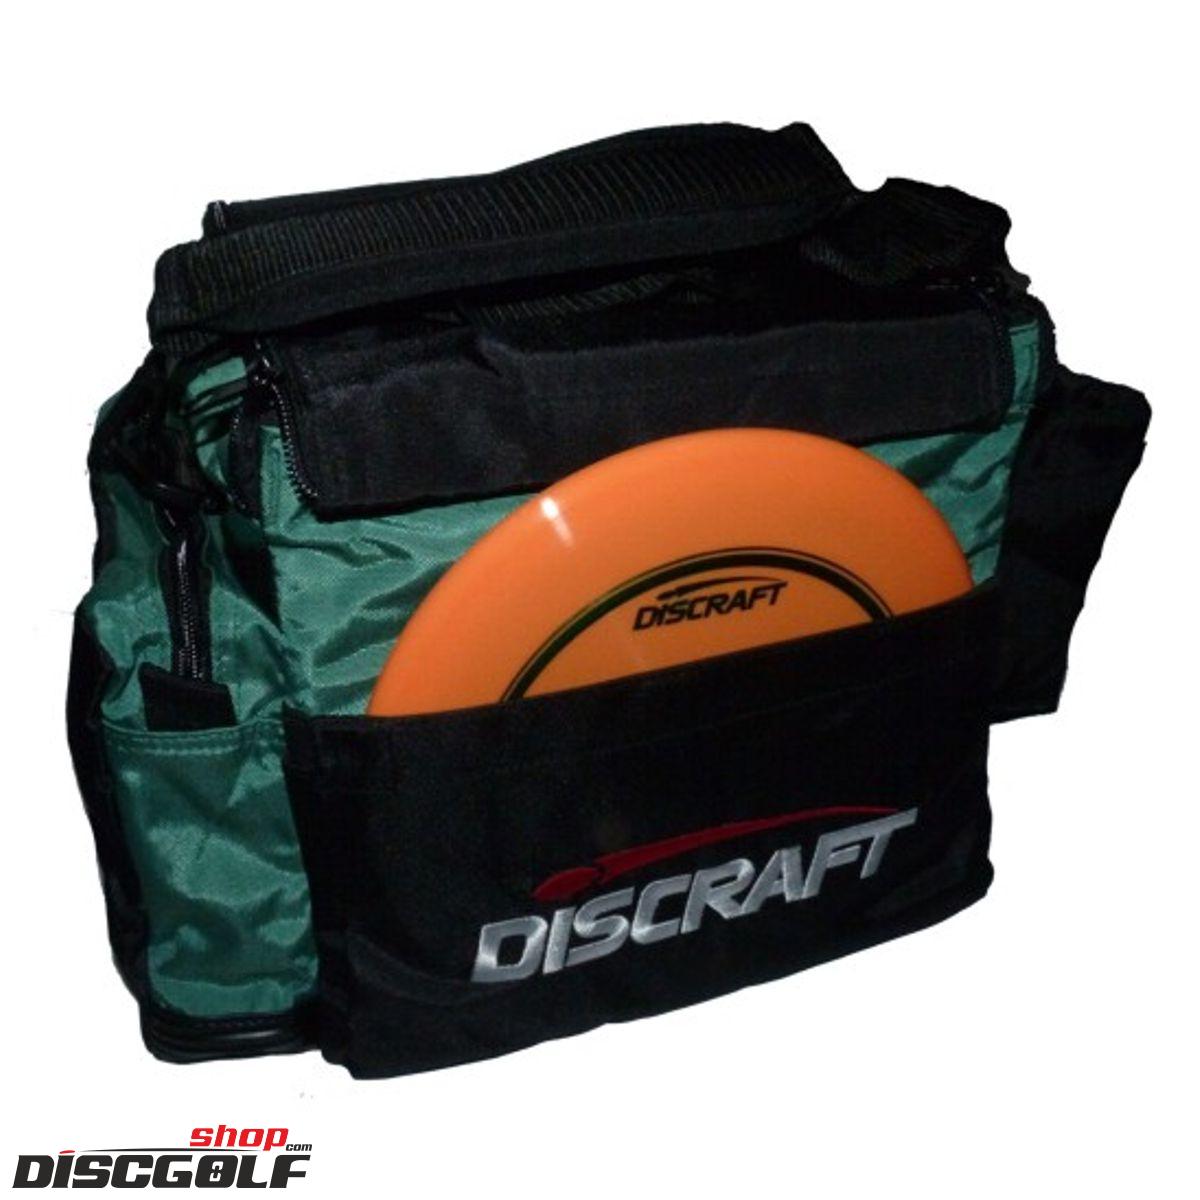 Discraft Tournament bag Černá/zelená (discgolf)